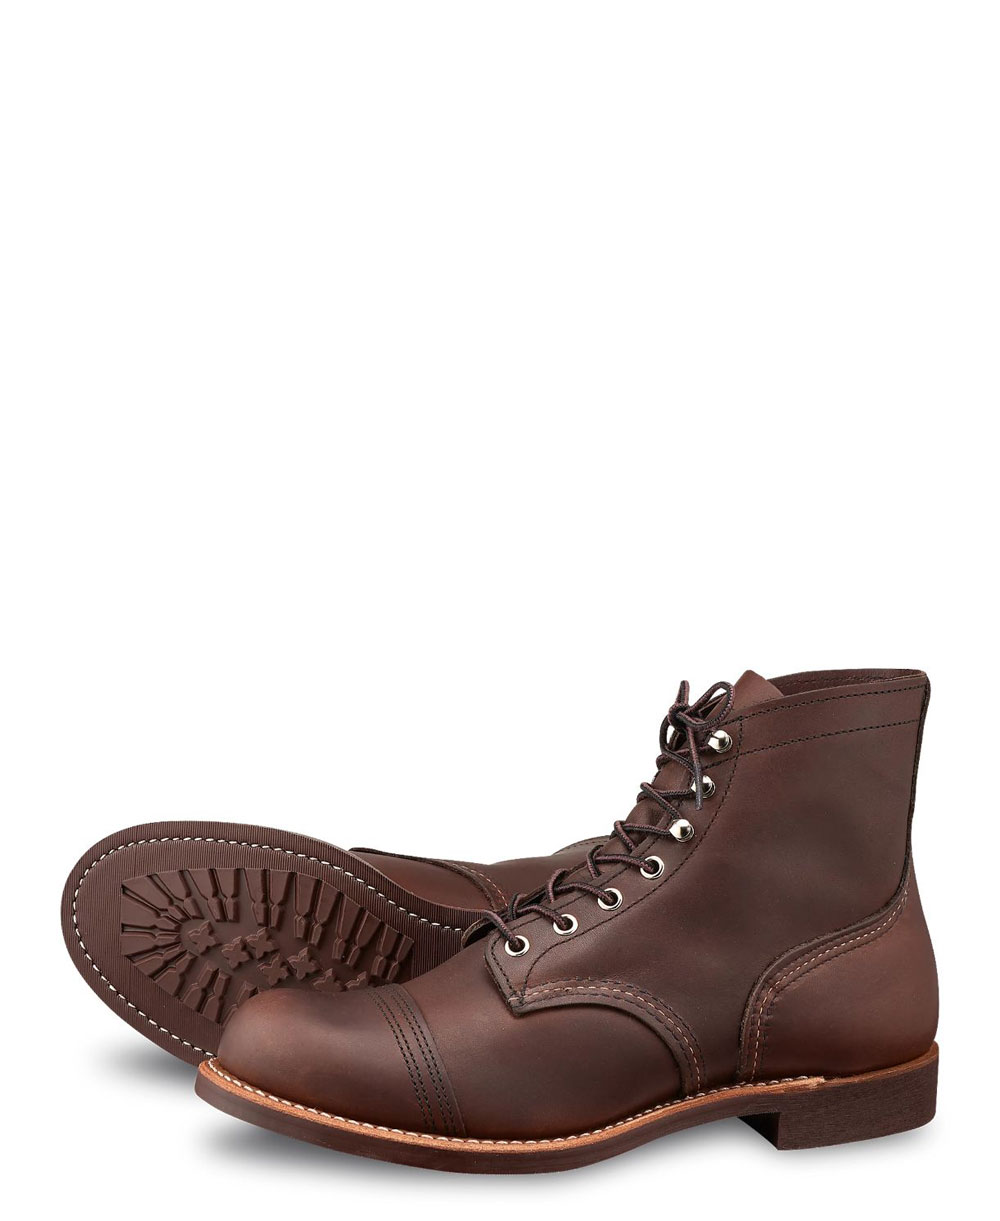 Men's Iron Ranger Leather Boots 8111